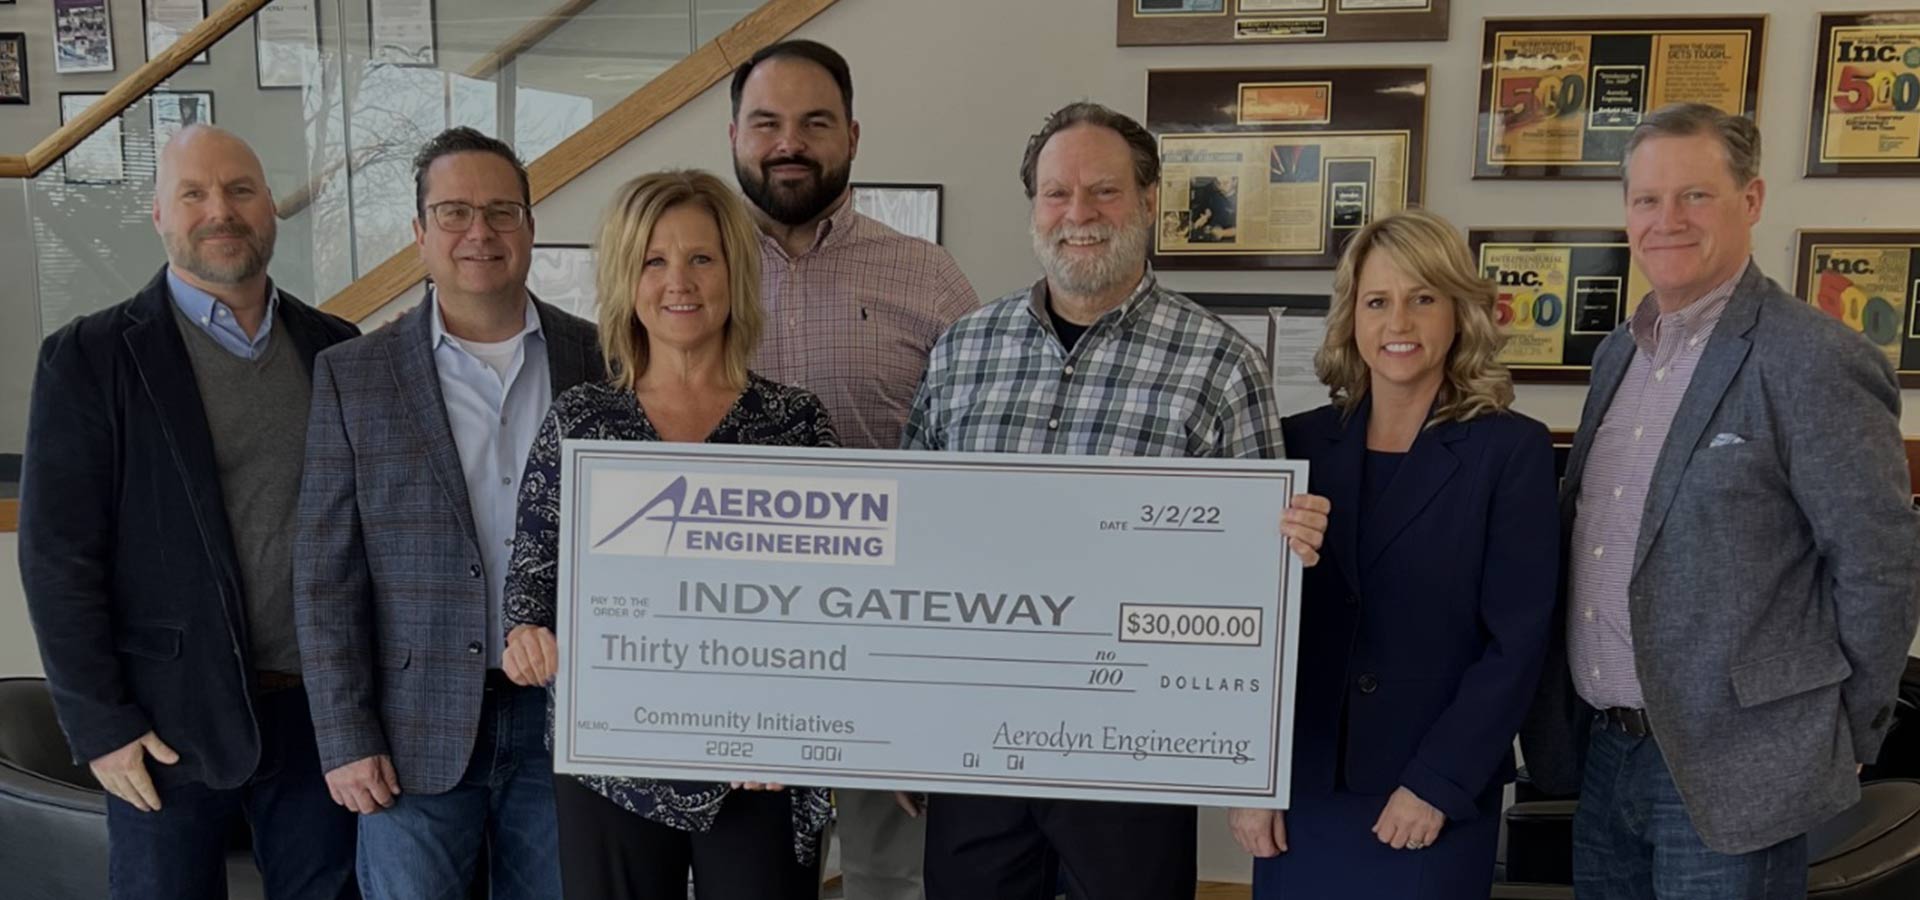 Indy Gateway Receives $30,000 Donation from AeroDyn Engineering